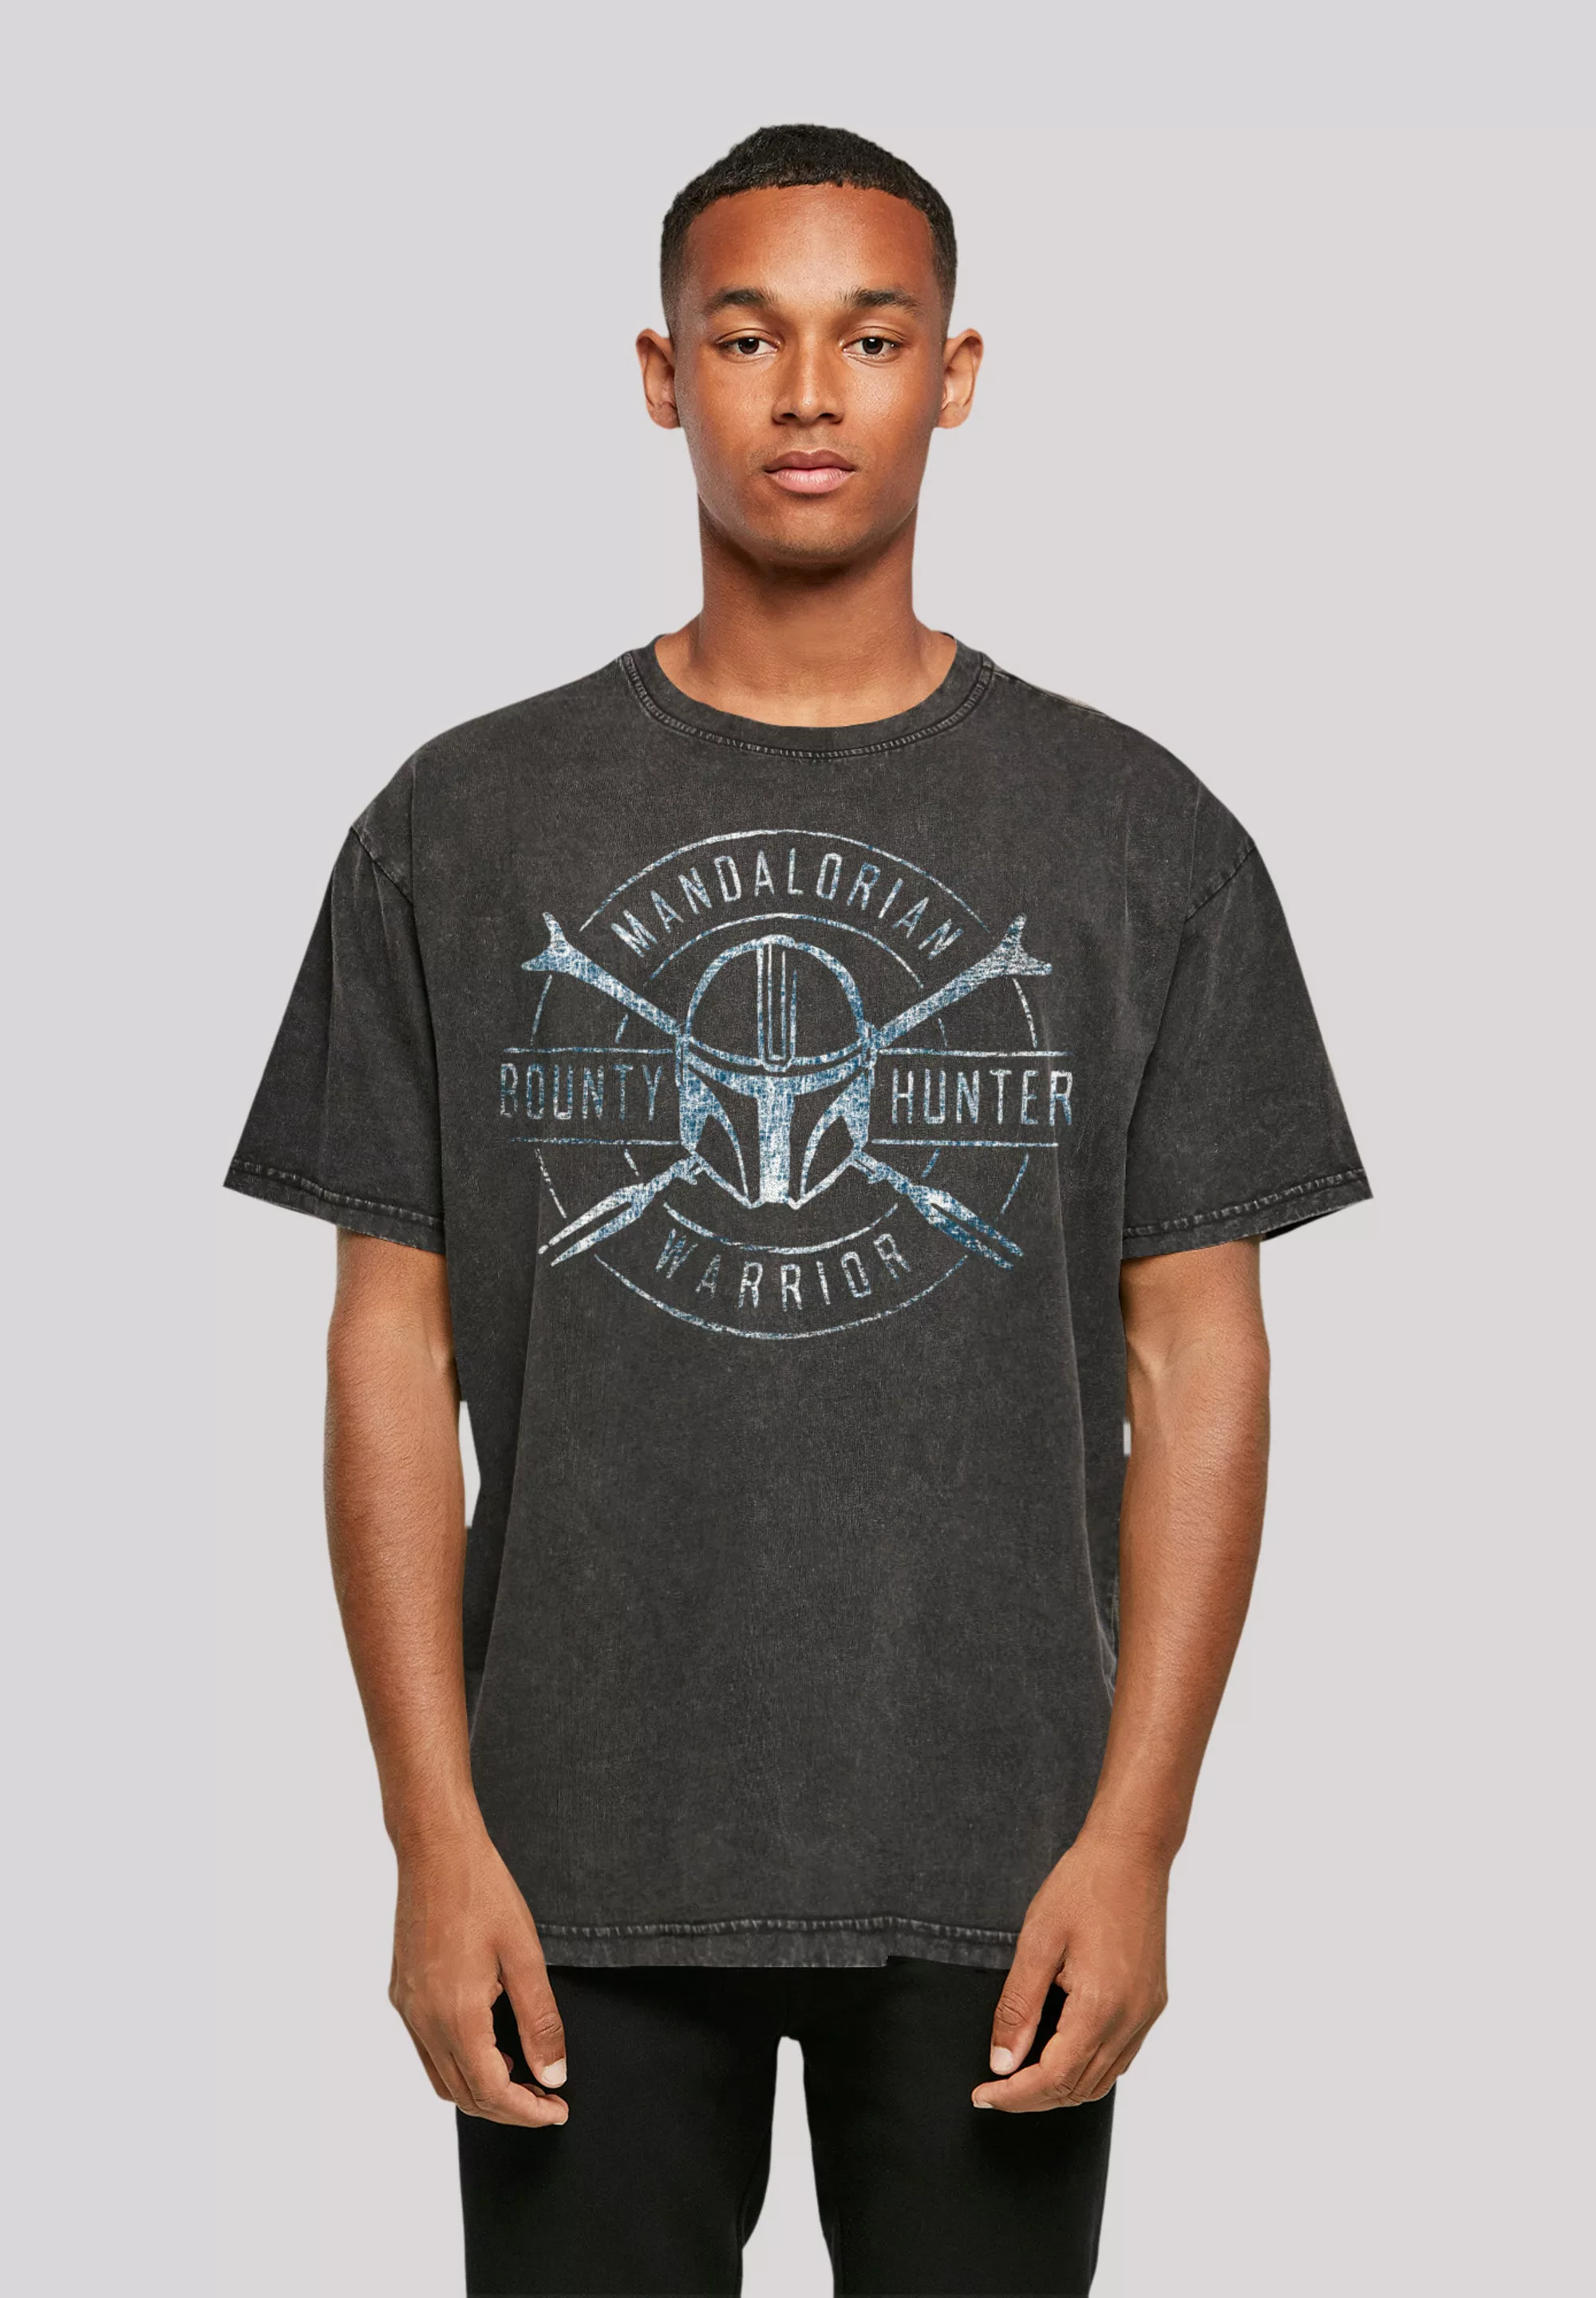 F4NT4STIC T-Shirt "Star Wars The Mandalorian Bounty Hunter", Premium Qualit günstig online kaufen